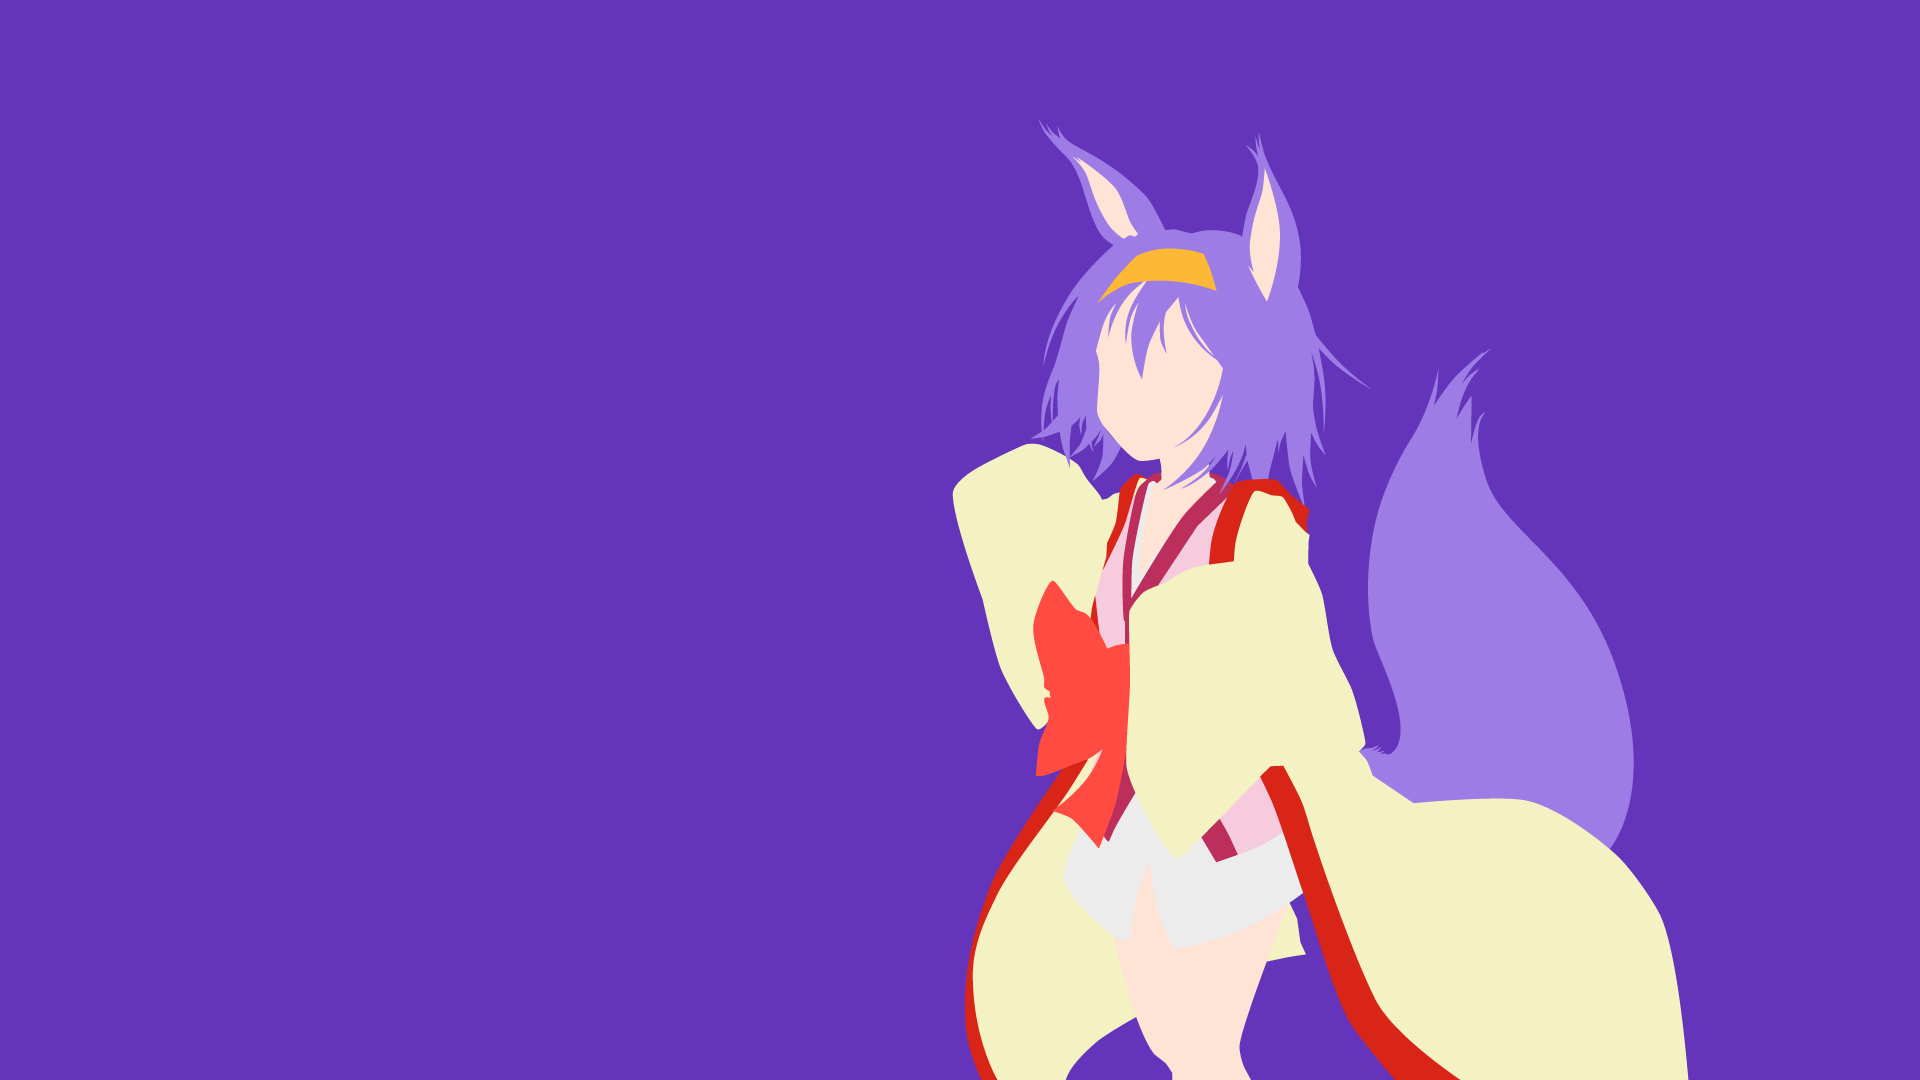 Anime 1920x1080 anime fantasy art fantasy girl fox girl minimalism simple background purple background anime girls